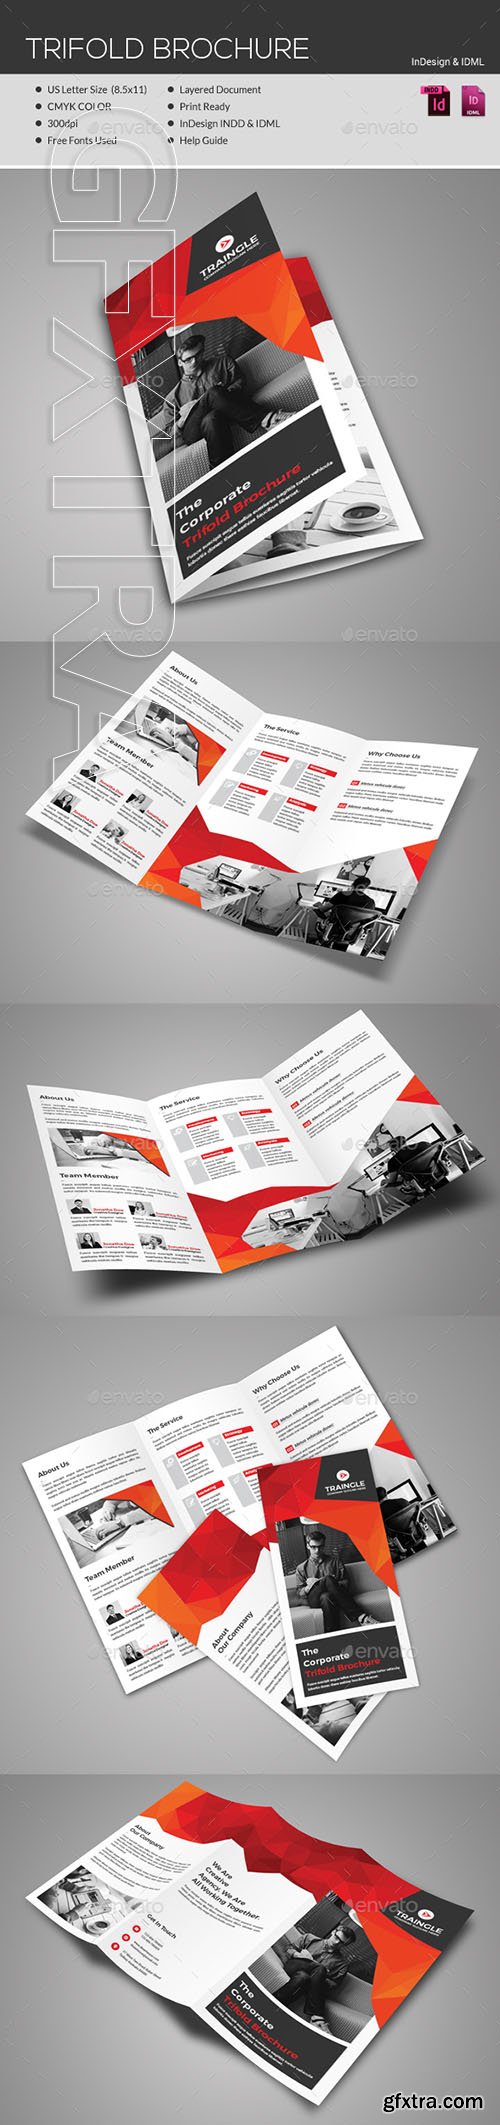 GraphicRiver - Trifold Brochure 21573089